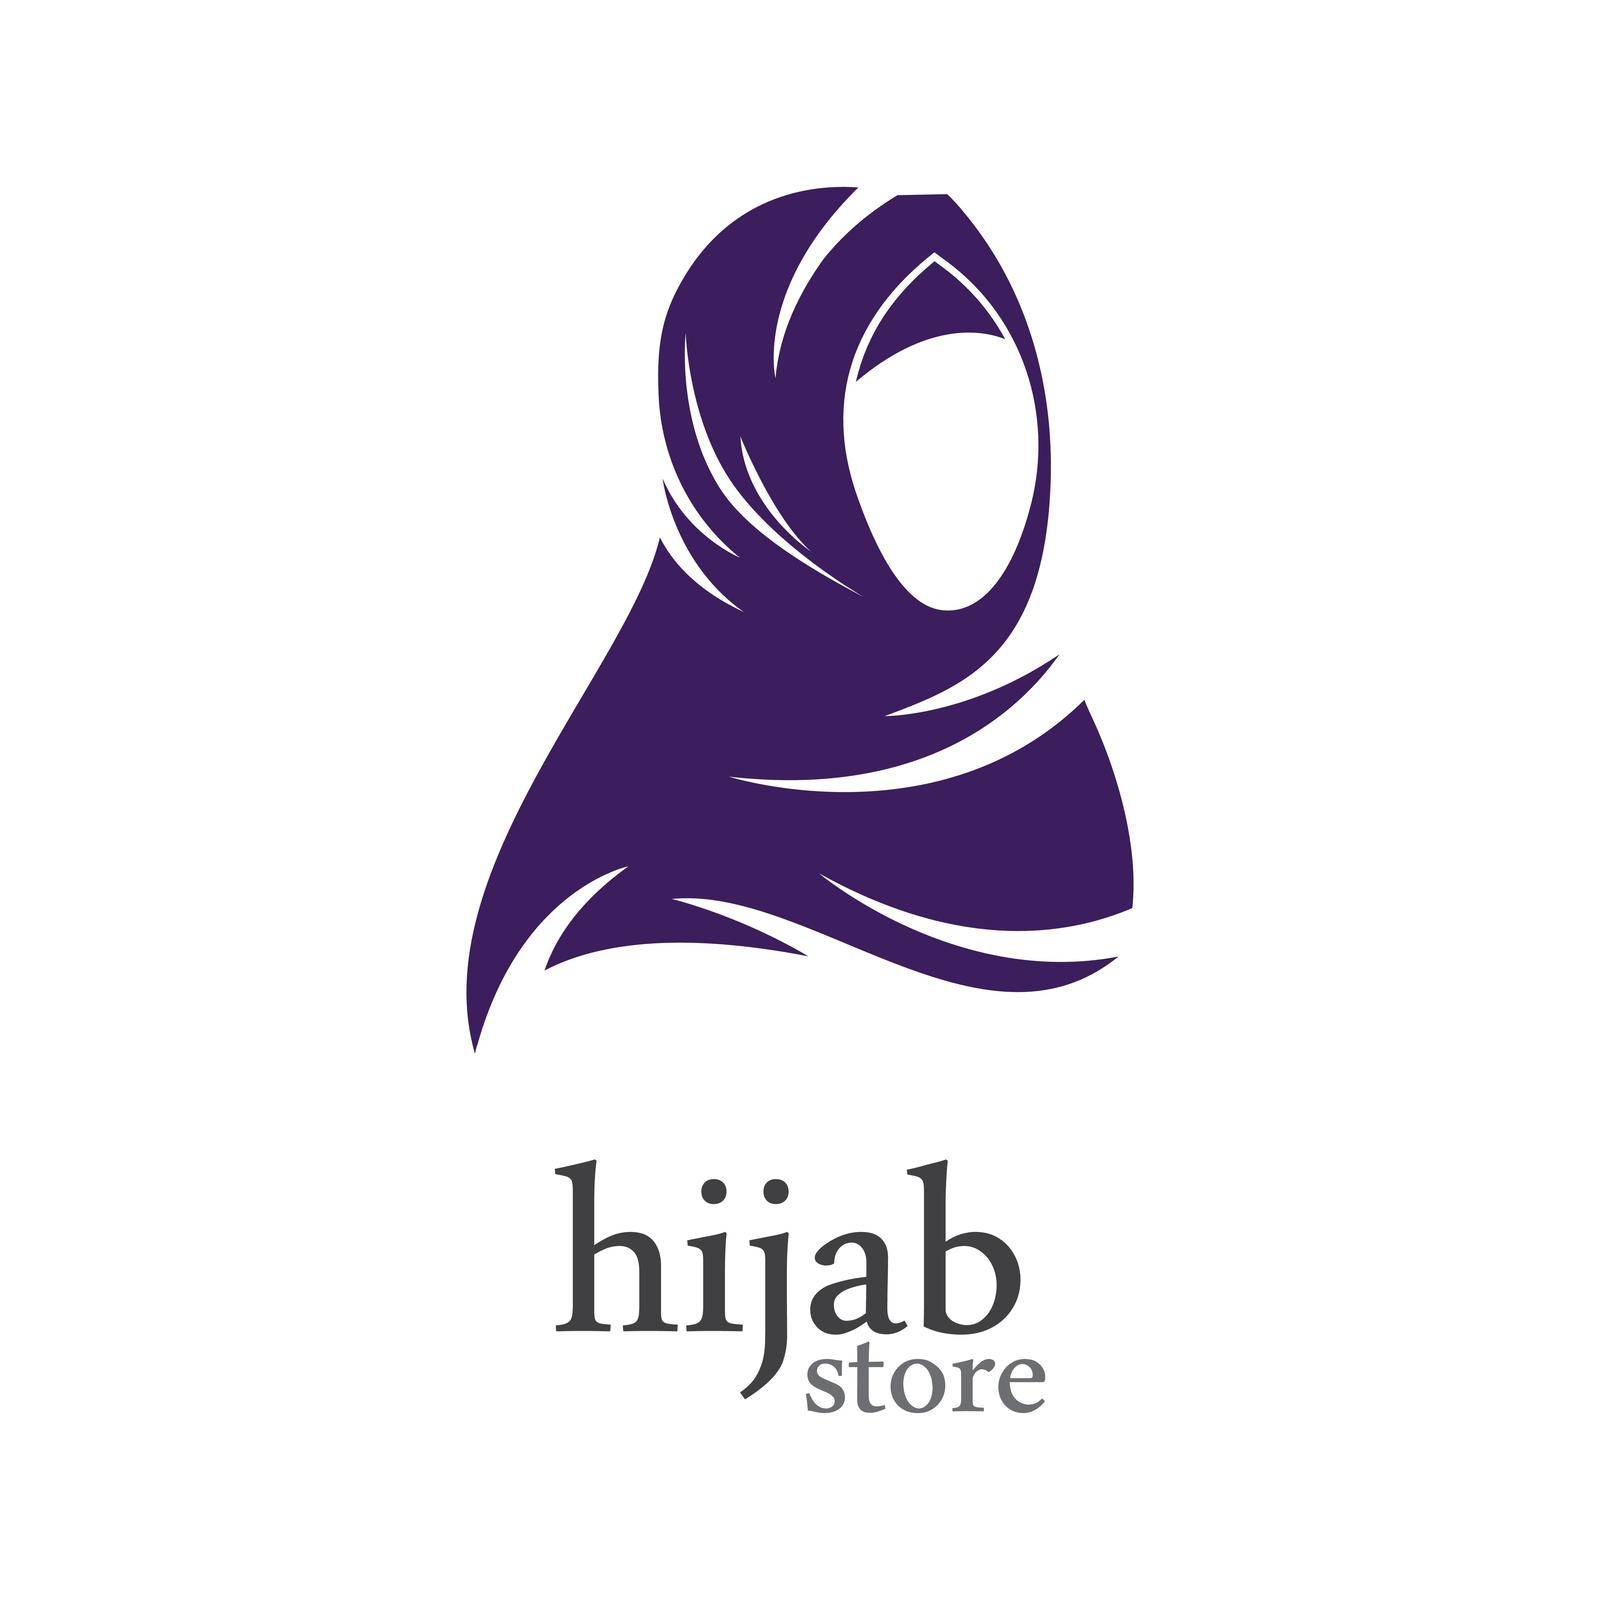 Hijab store logo vector template